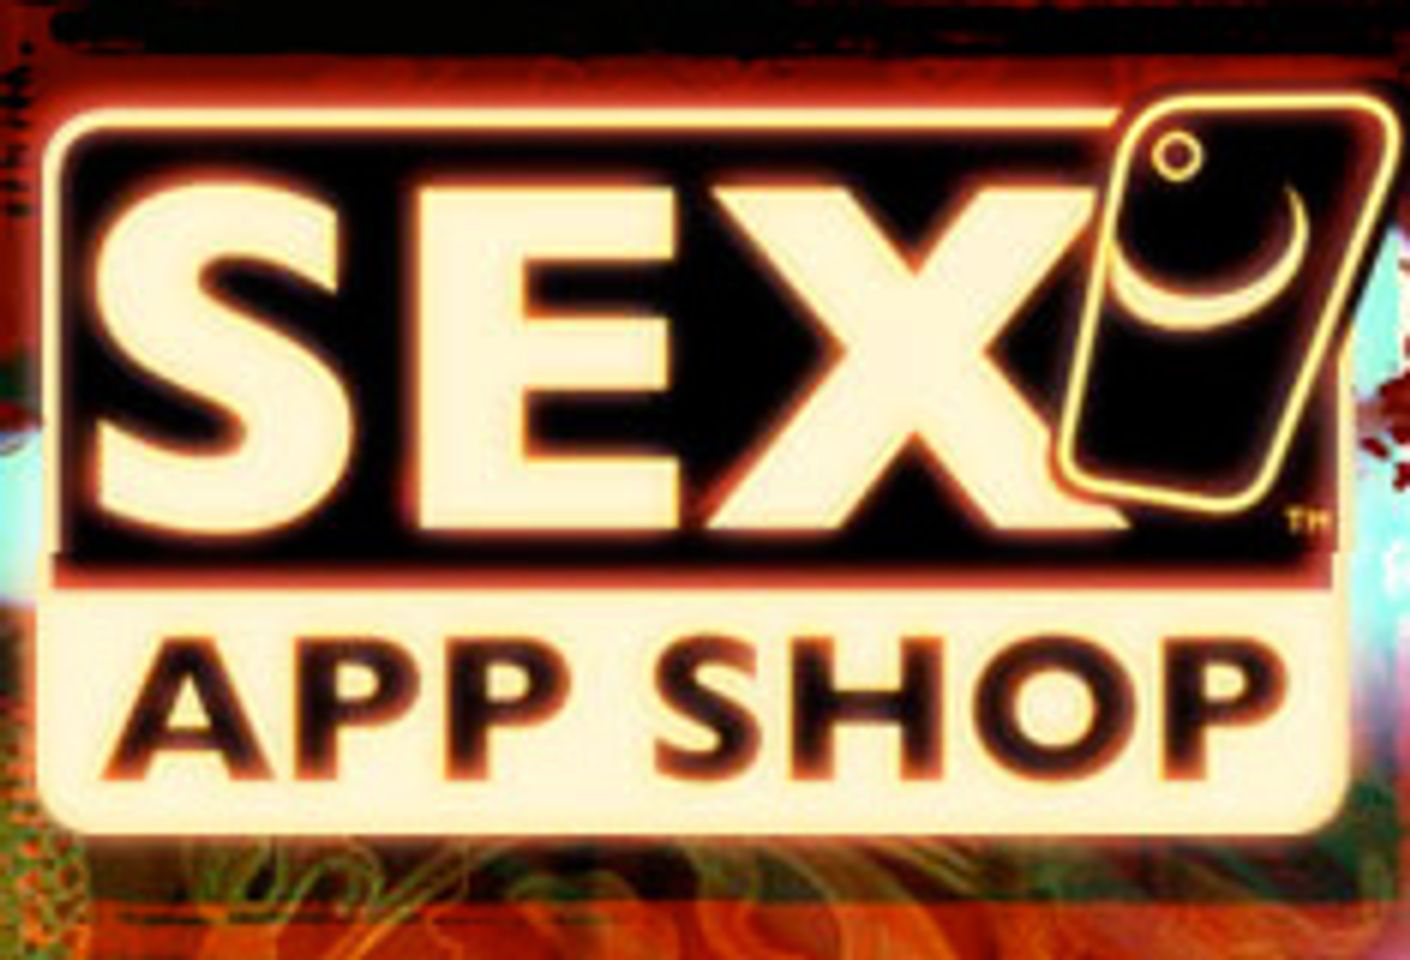 Sex App Shop to Sponsor 2010 AVN Adult Entertainment Expo